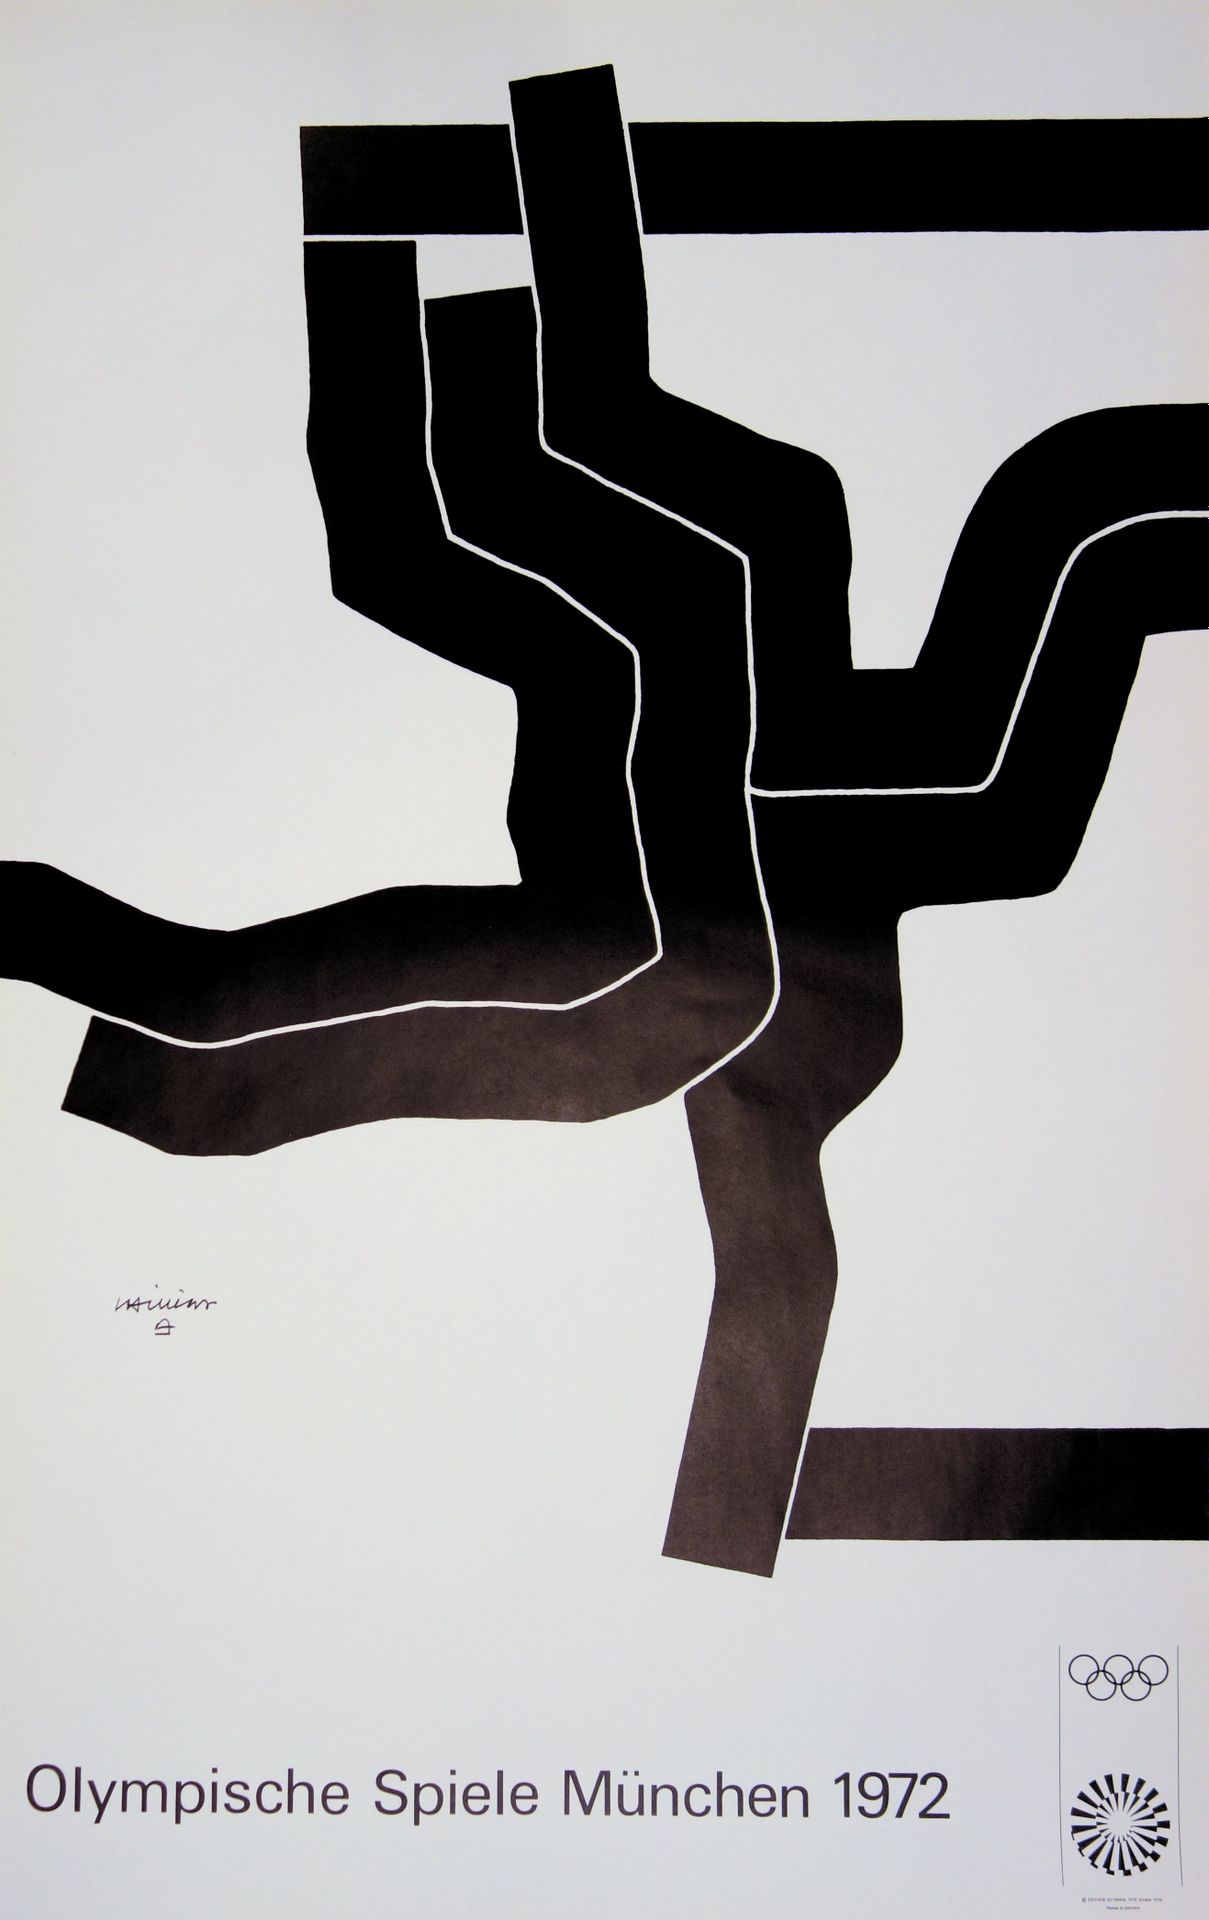 Eduardo Chillida Eduardo CHILLIDA

组成 JO

原始石版画海报

板块中的签名

101 x 64 cm

1972年为慕尼&hellip;